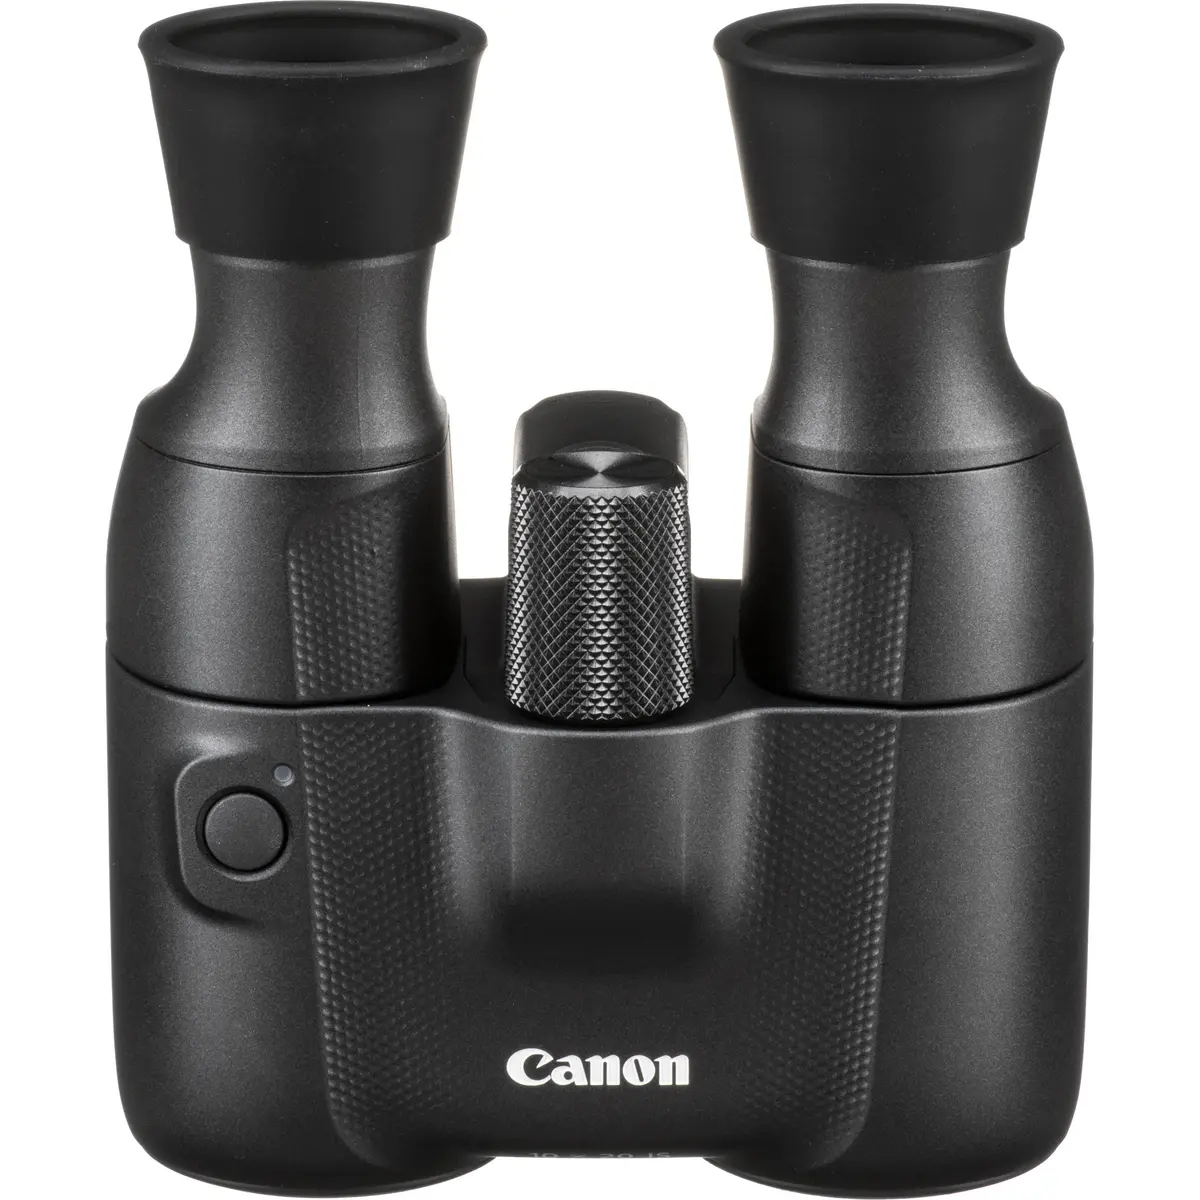 2. Canon 10 x 20 IS Binoculars